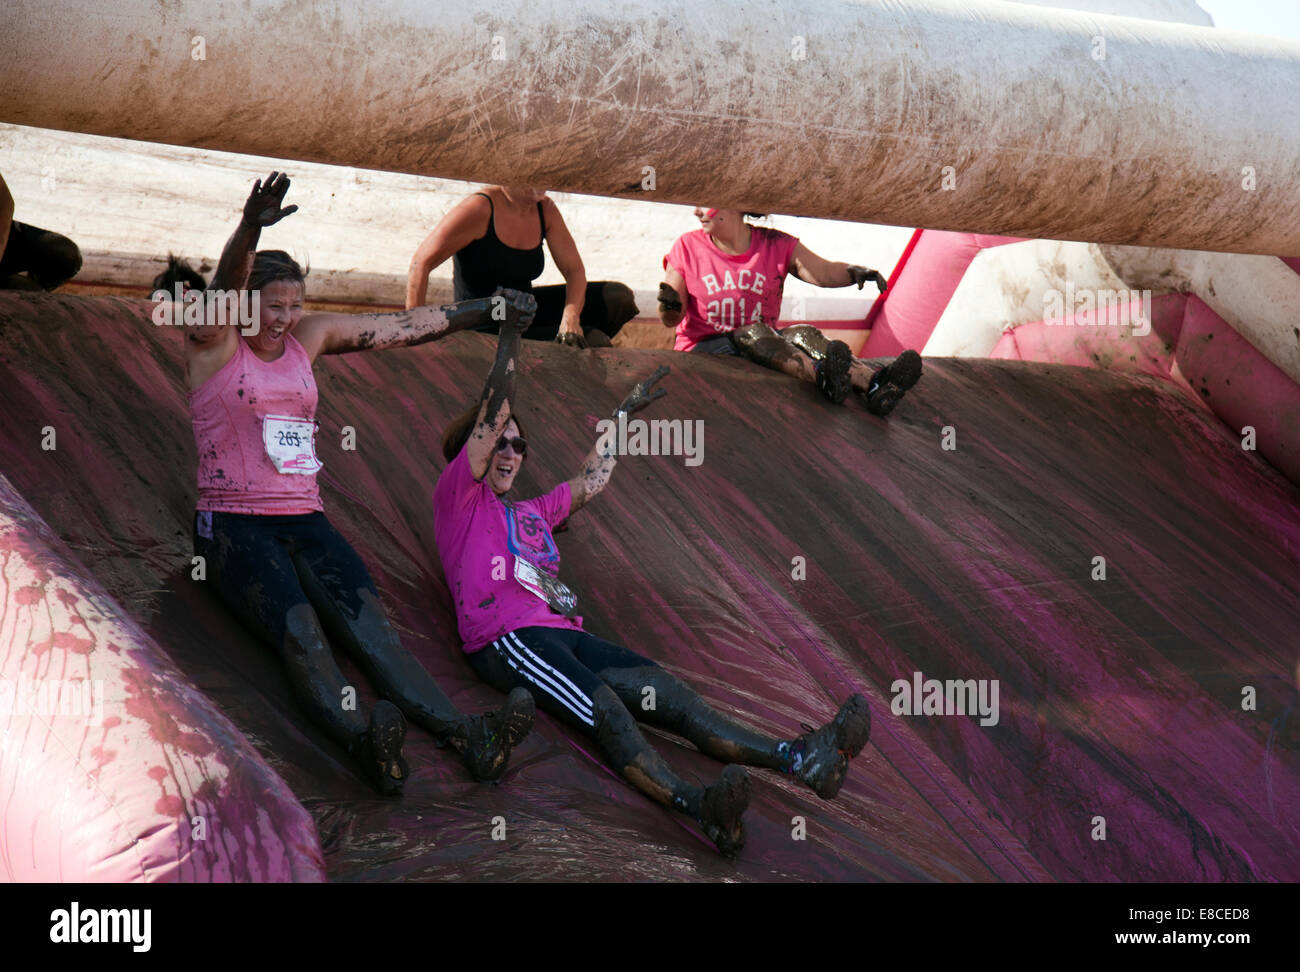 London, UK. 5th Oct, 2014. Cancer Race for Life Run - Participants down Mud Slide near Finish on Clapham Common, London UK Credit:  M.Sobreira/Alamy Live News Stock Photo